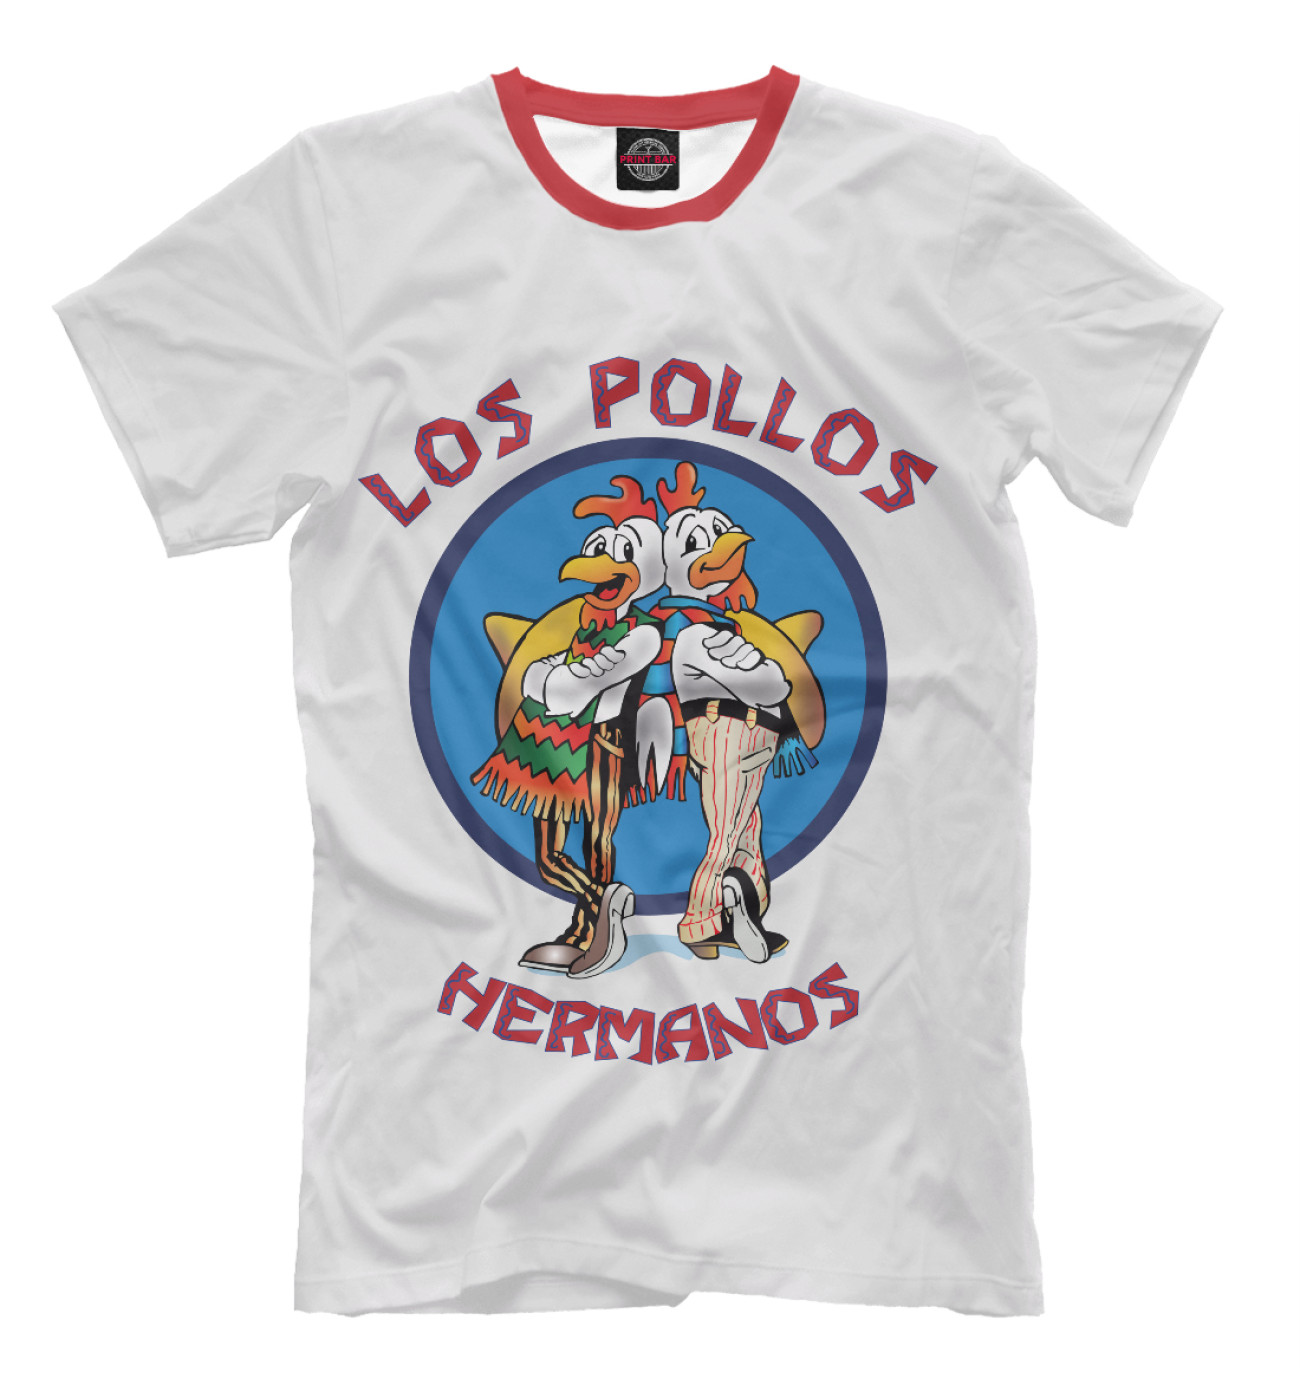 Мужская Футболка Los Pollos Hermanos, артикул: VVT-780401-fut-2